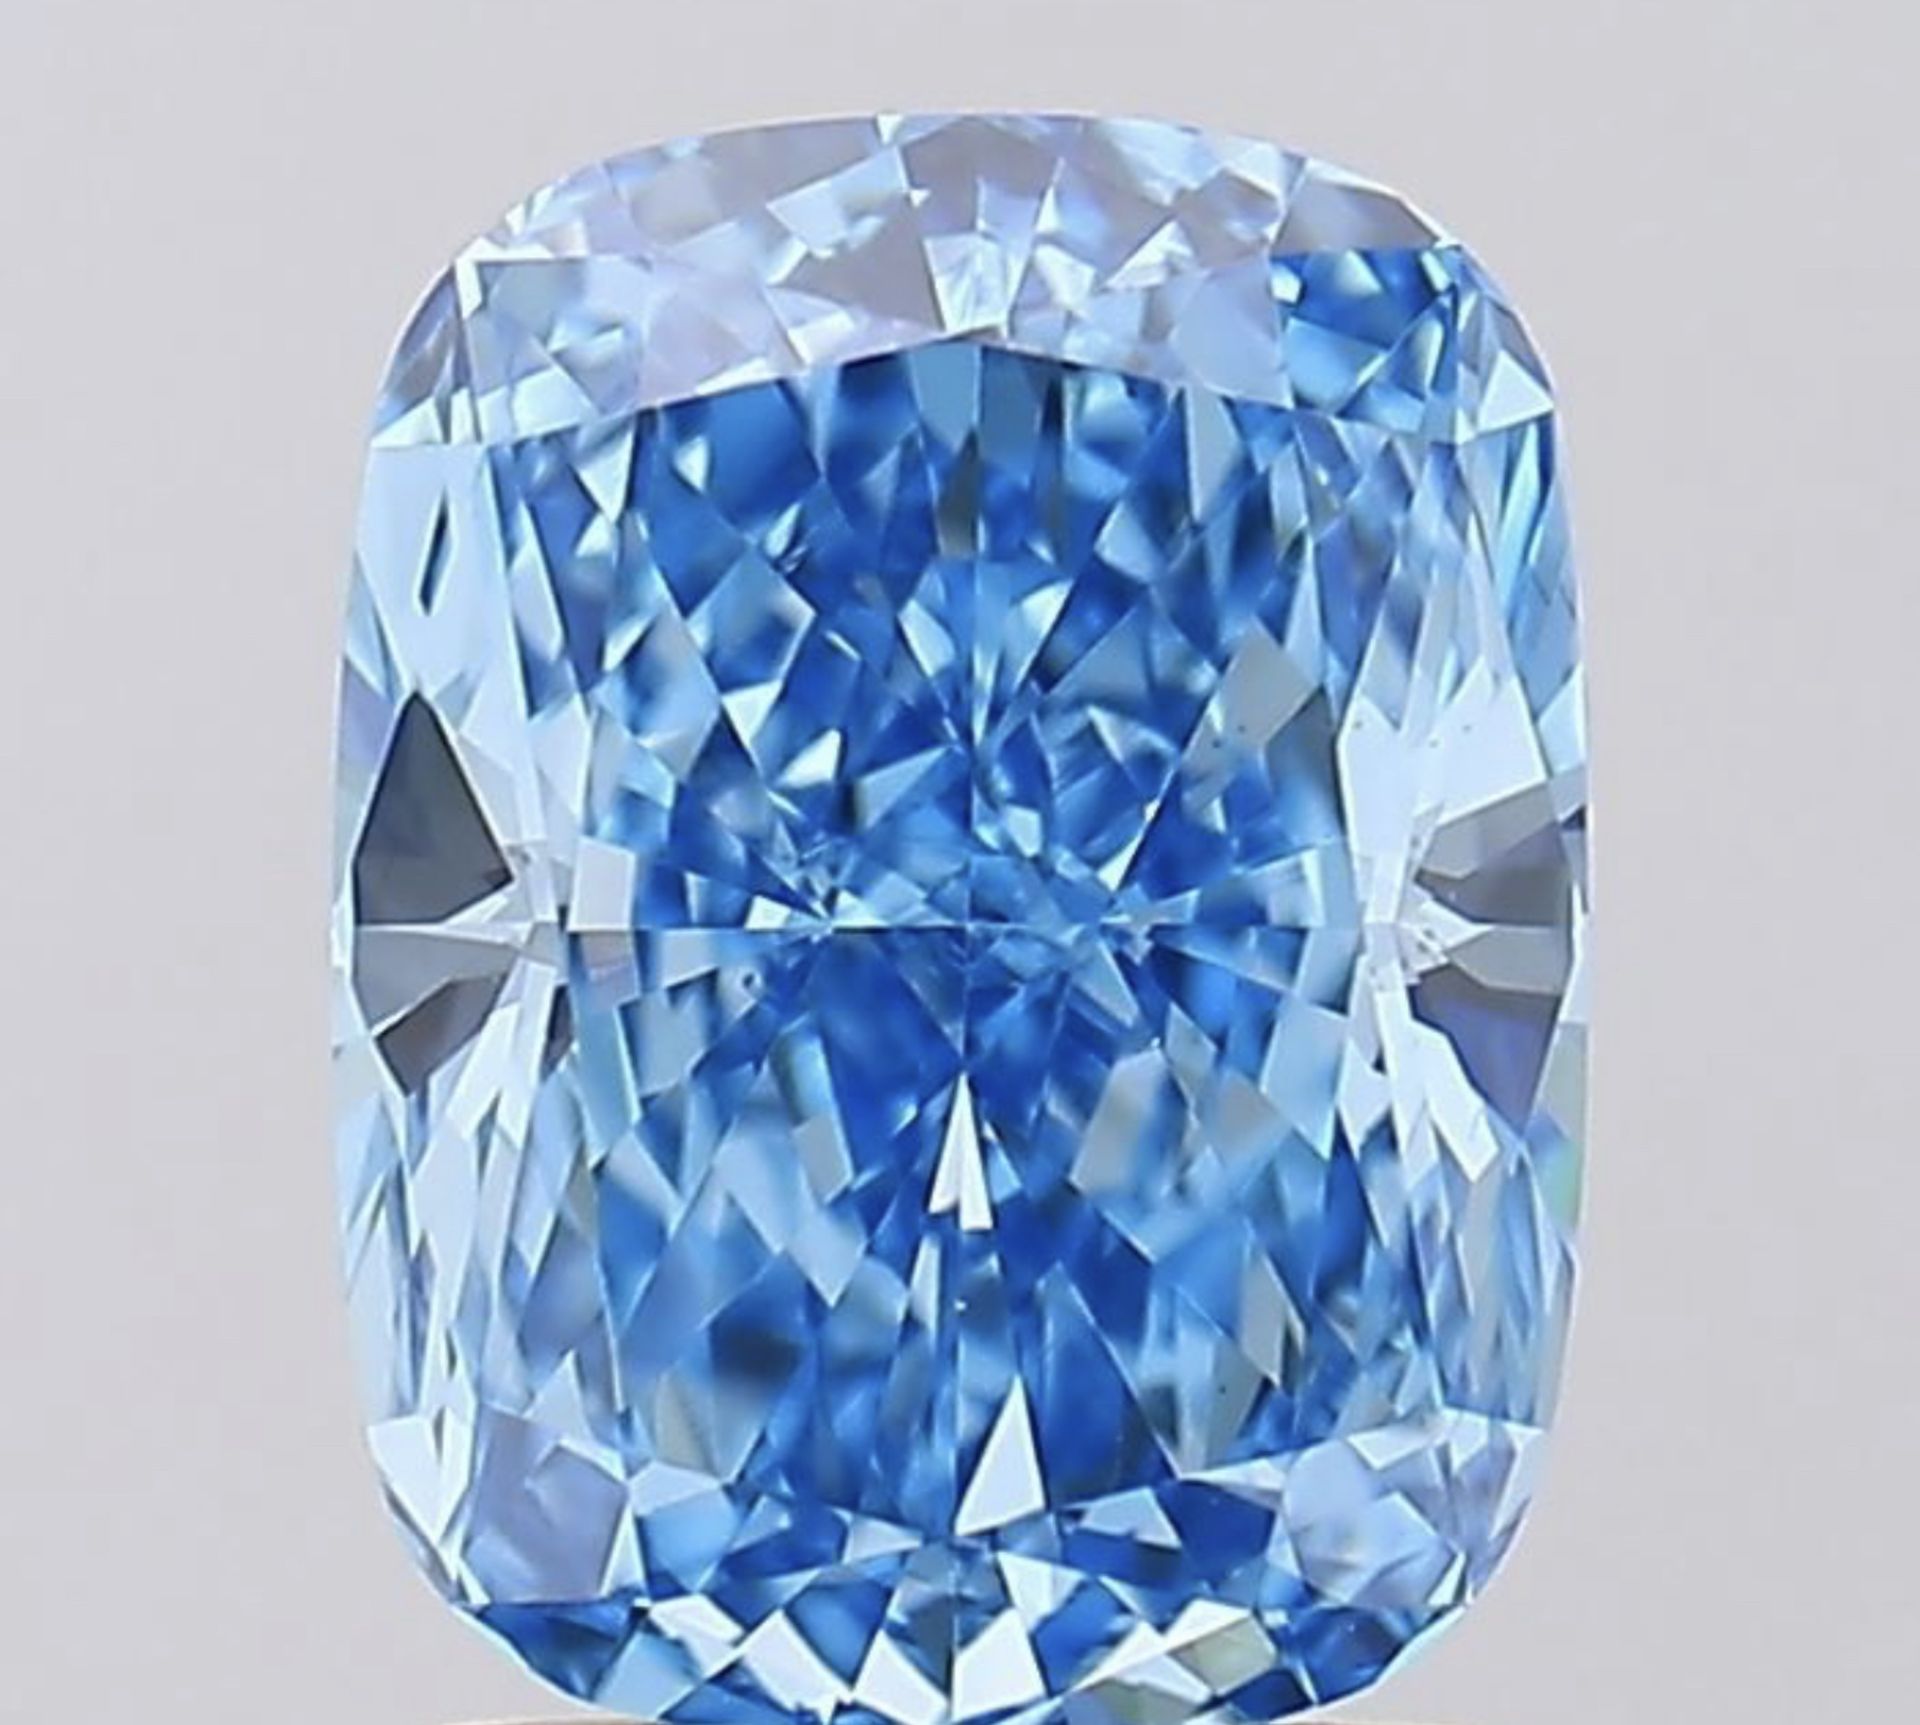 **ON SALE**Cushion Brilliant Cut Diamond Fancy Blue Colour VS1 Clarity 1.63 Carat EX - LG588347098